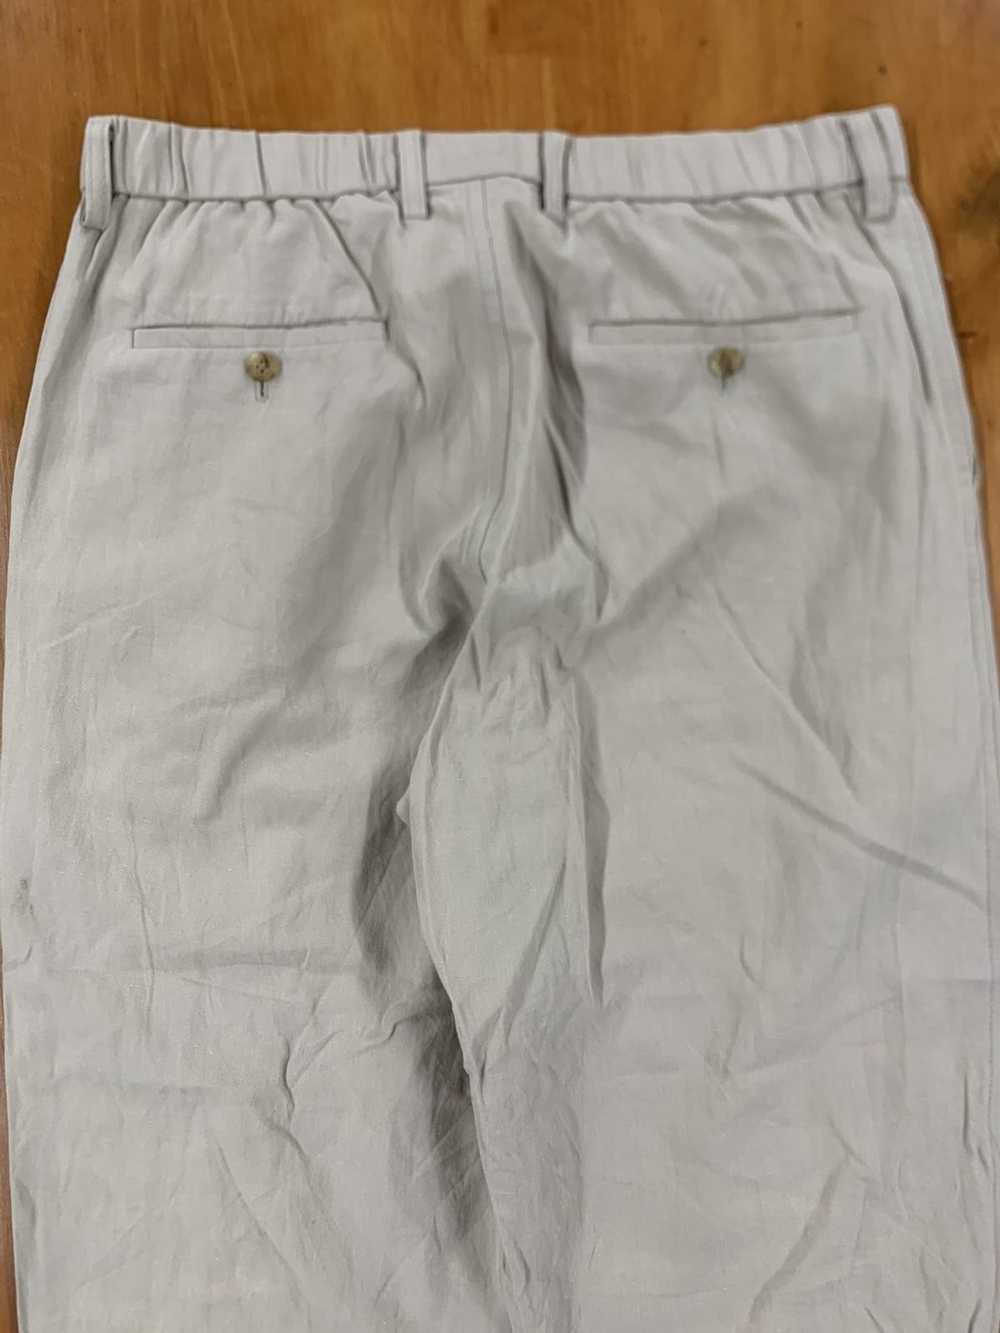 Japanese Brand Issye Miyake Khaki Pants - image 5